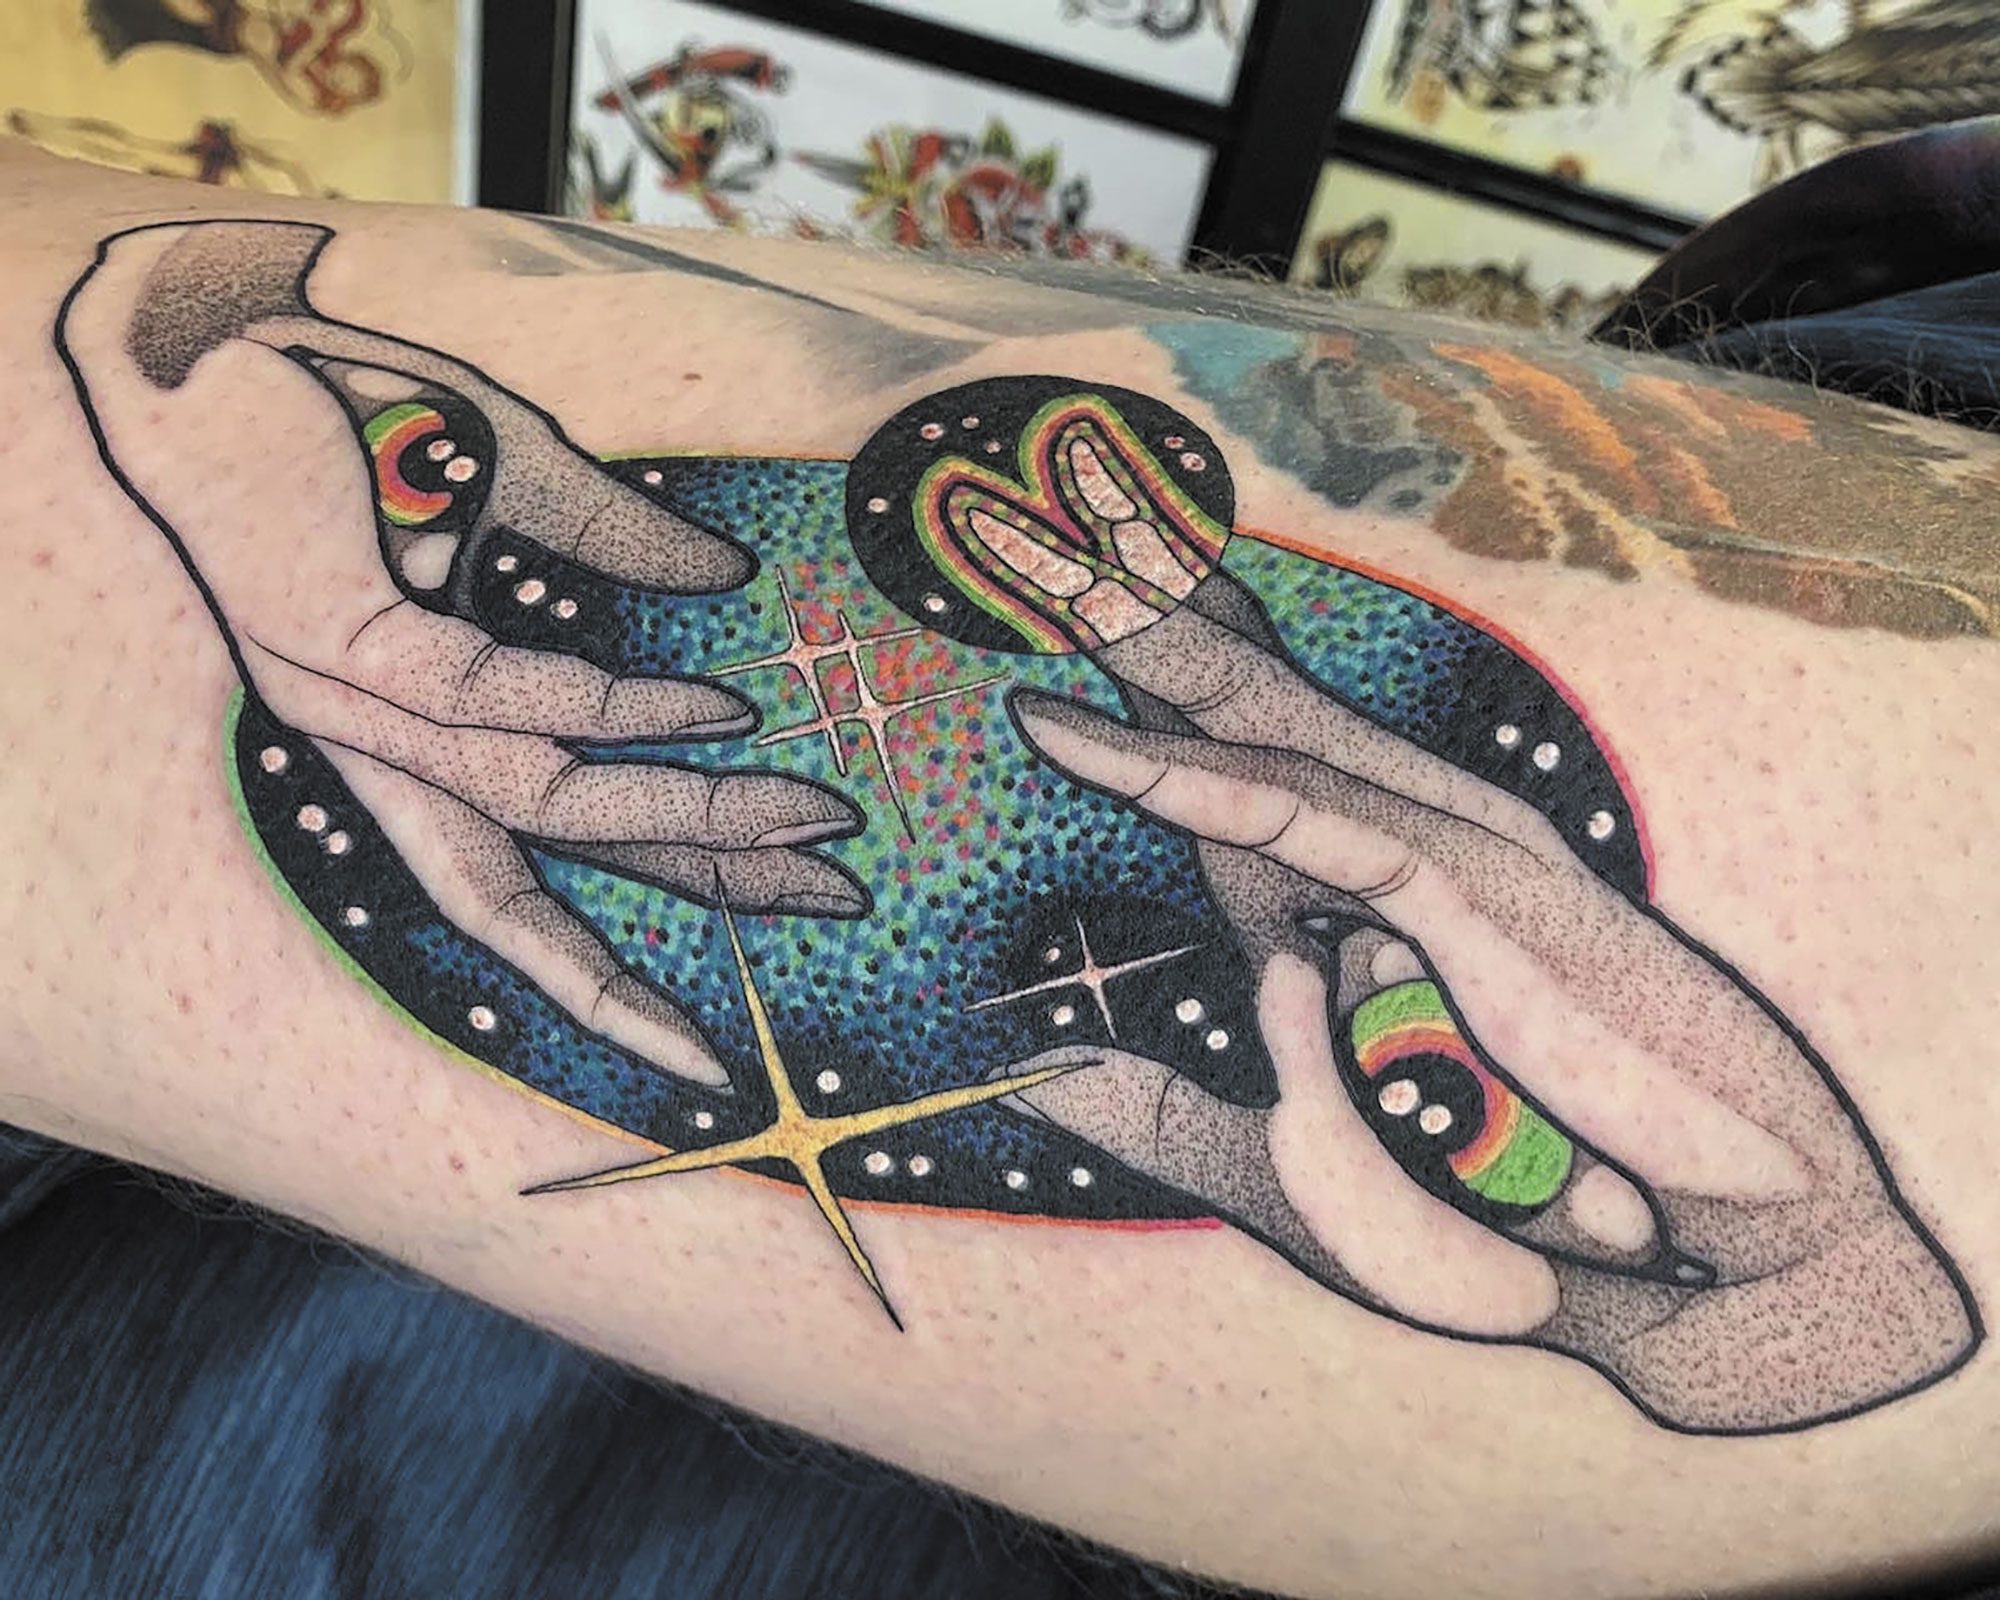 Space tattoo by Dino Falkfino @ Falken Owl Tattoo, Lakewood CO. : r/tattoos